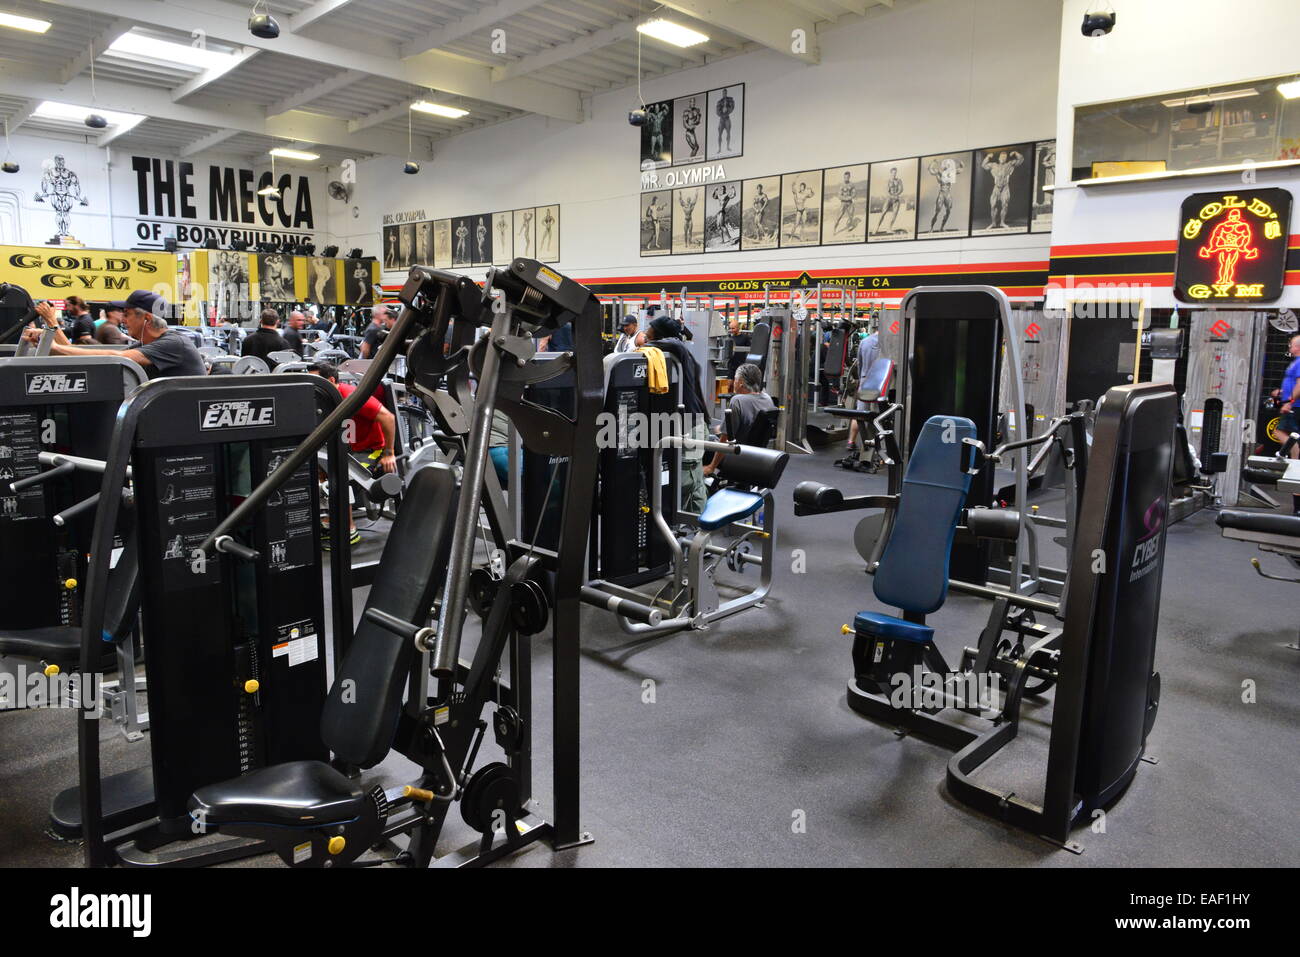 Golds Gym, Venice,California Stock Photo - Alamy